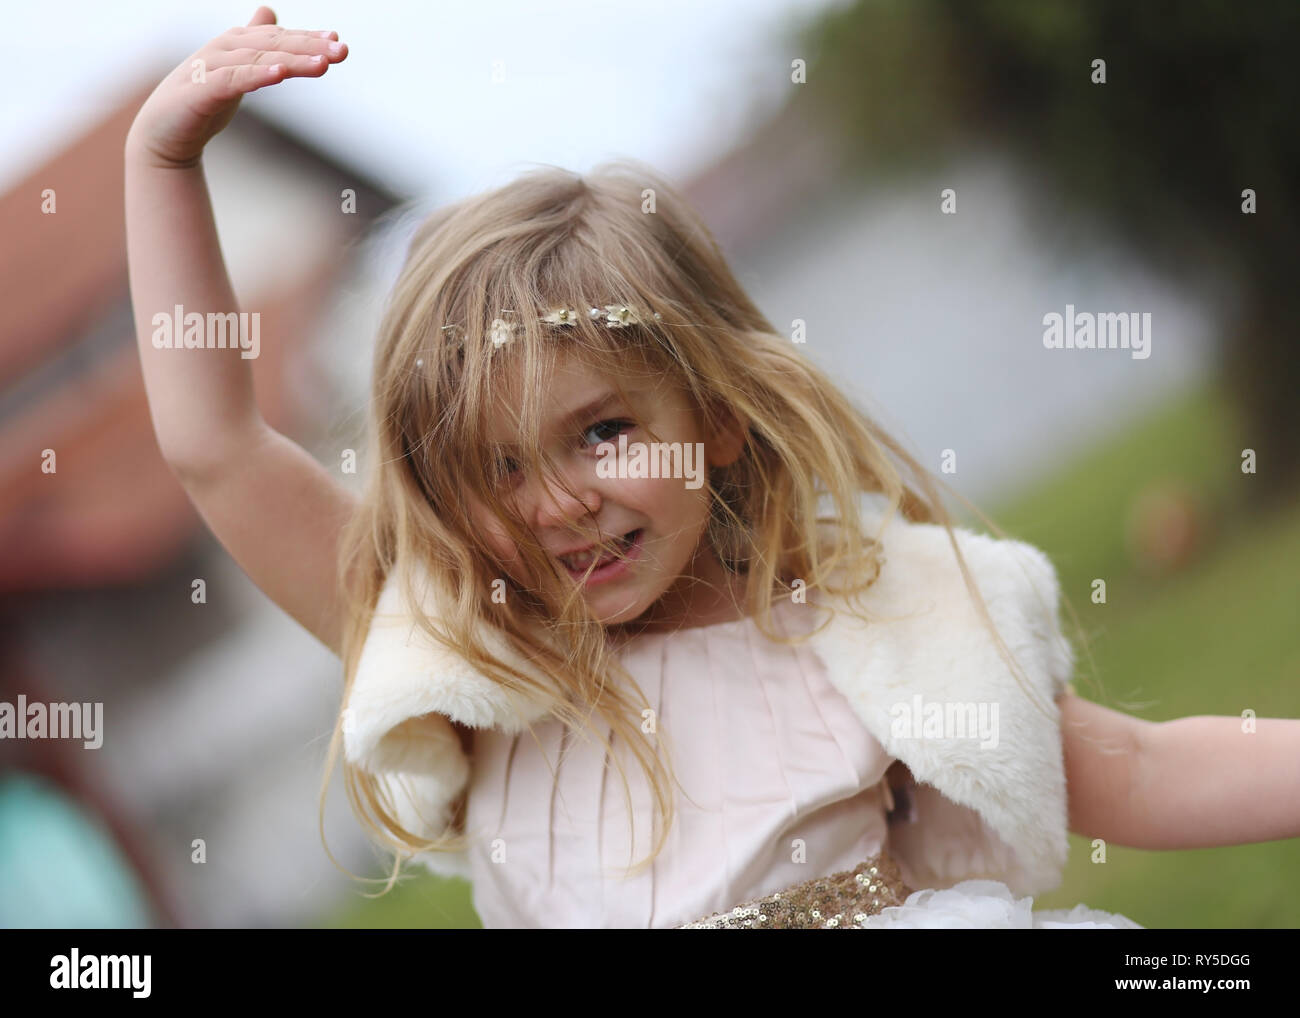 Little girl playing and having fun Stock Photo